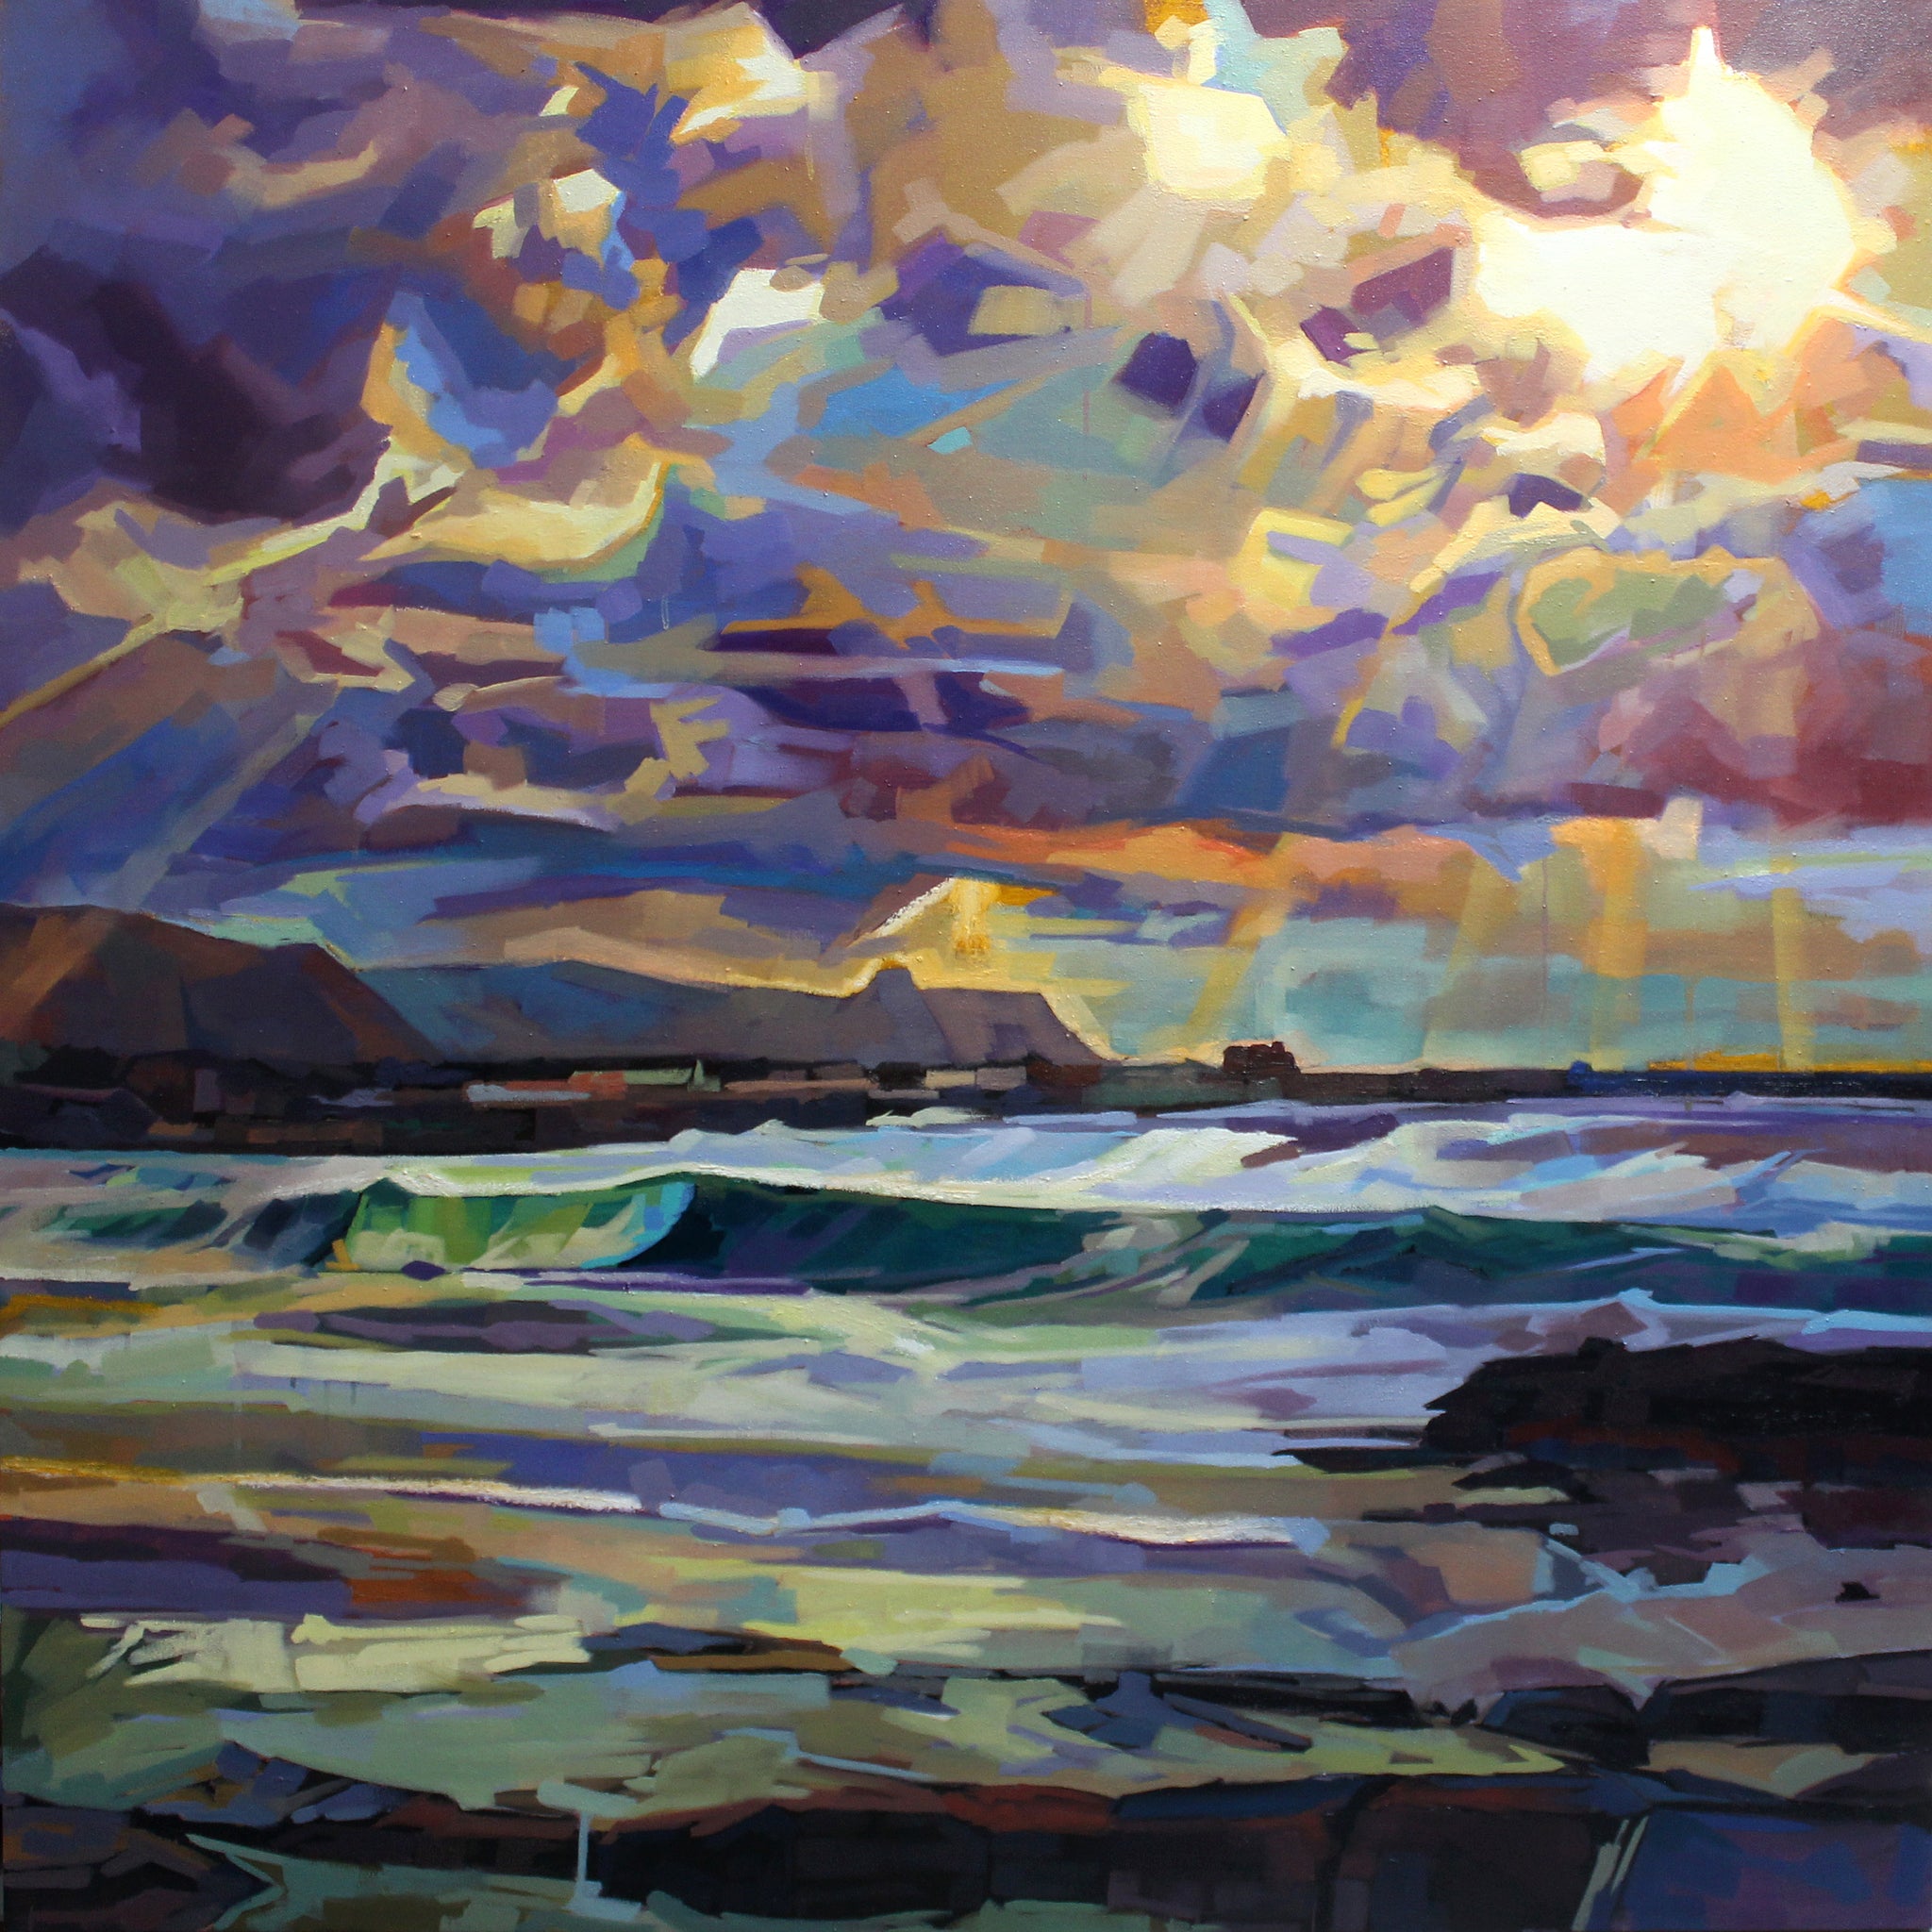 Main Beach, Bundoran, Storm Emma - Contemporary art from Ireland. Paintings & prints by Irish seascape & landscape artist Kevin Lowery.